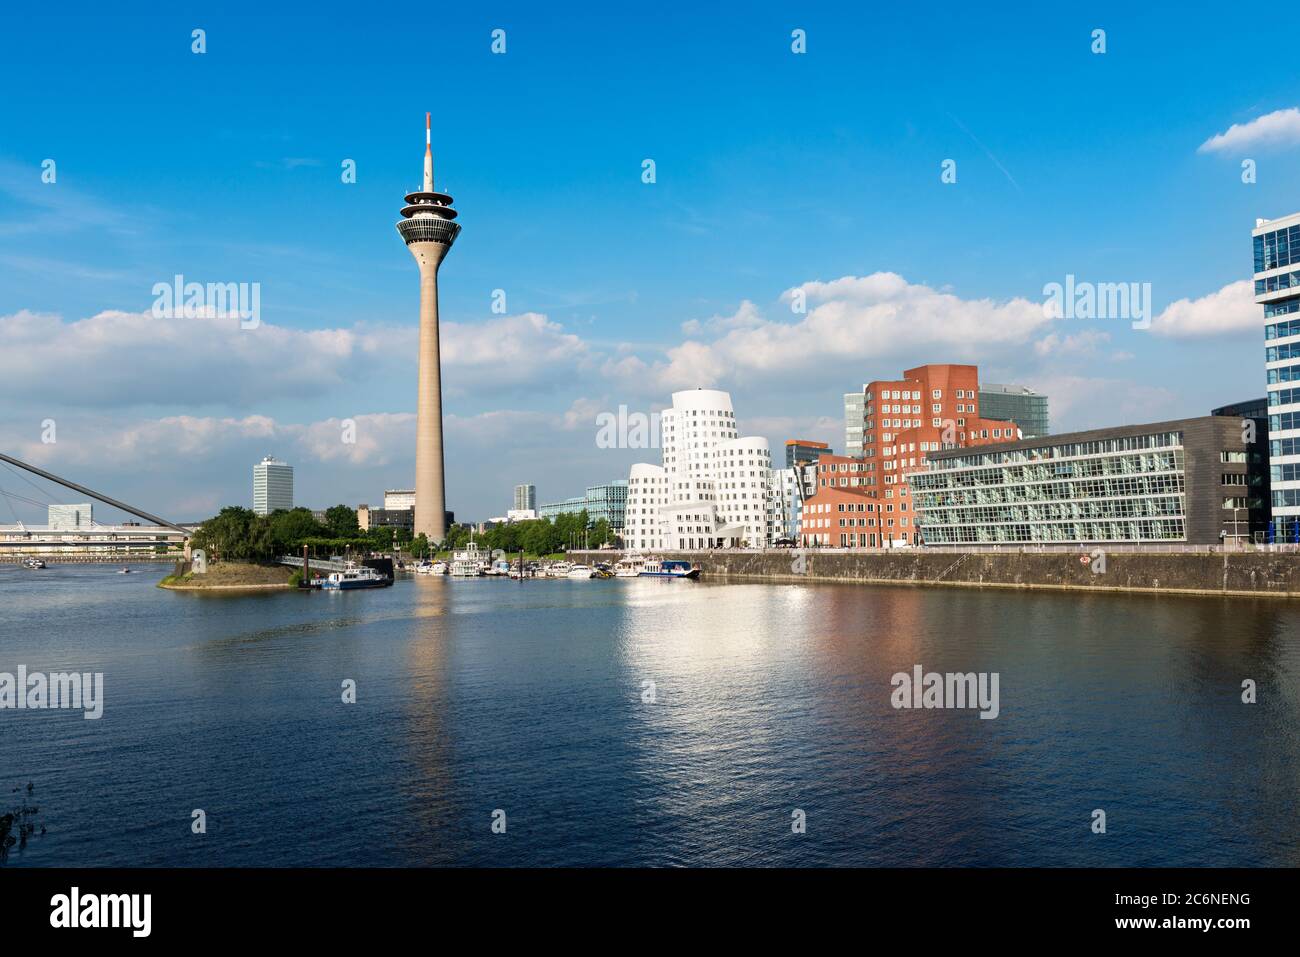 Düsseldorf's Media Harbor (Medienhafen) with Rheinturm tower and modern architecture by Frank O. Gehry. Stock Photo